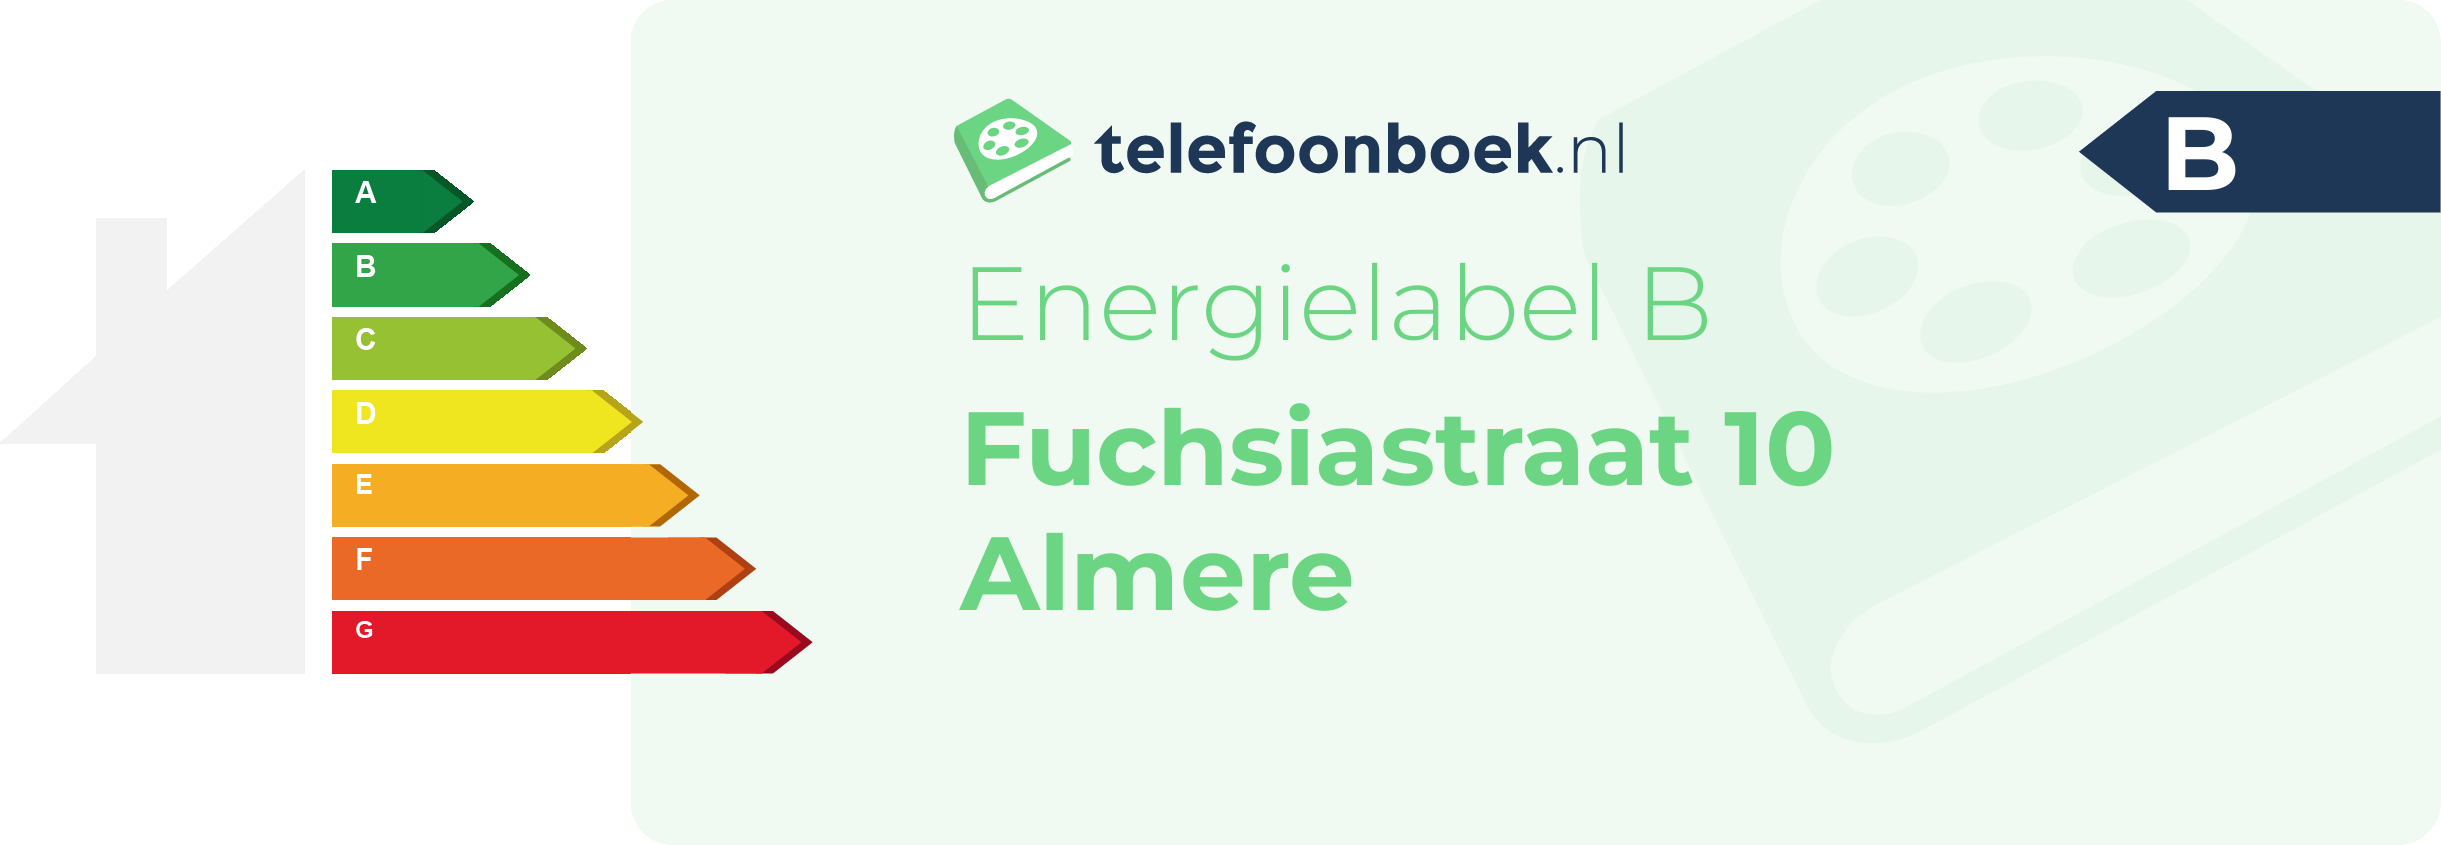 Energielabel Fuchsiastraat 10 Almere